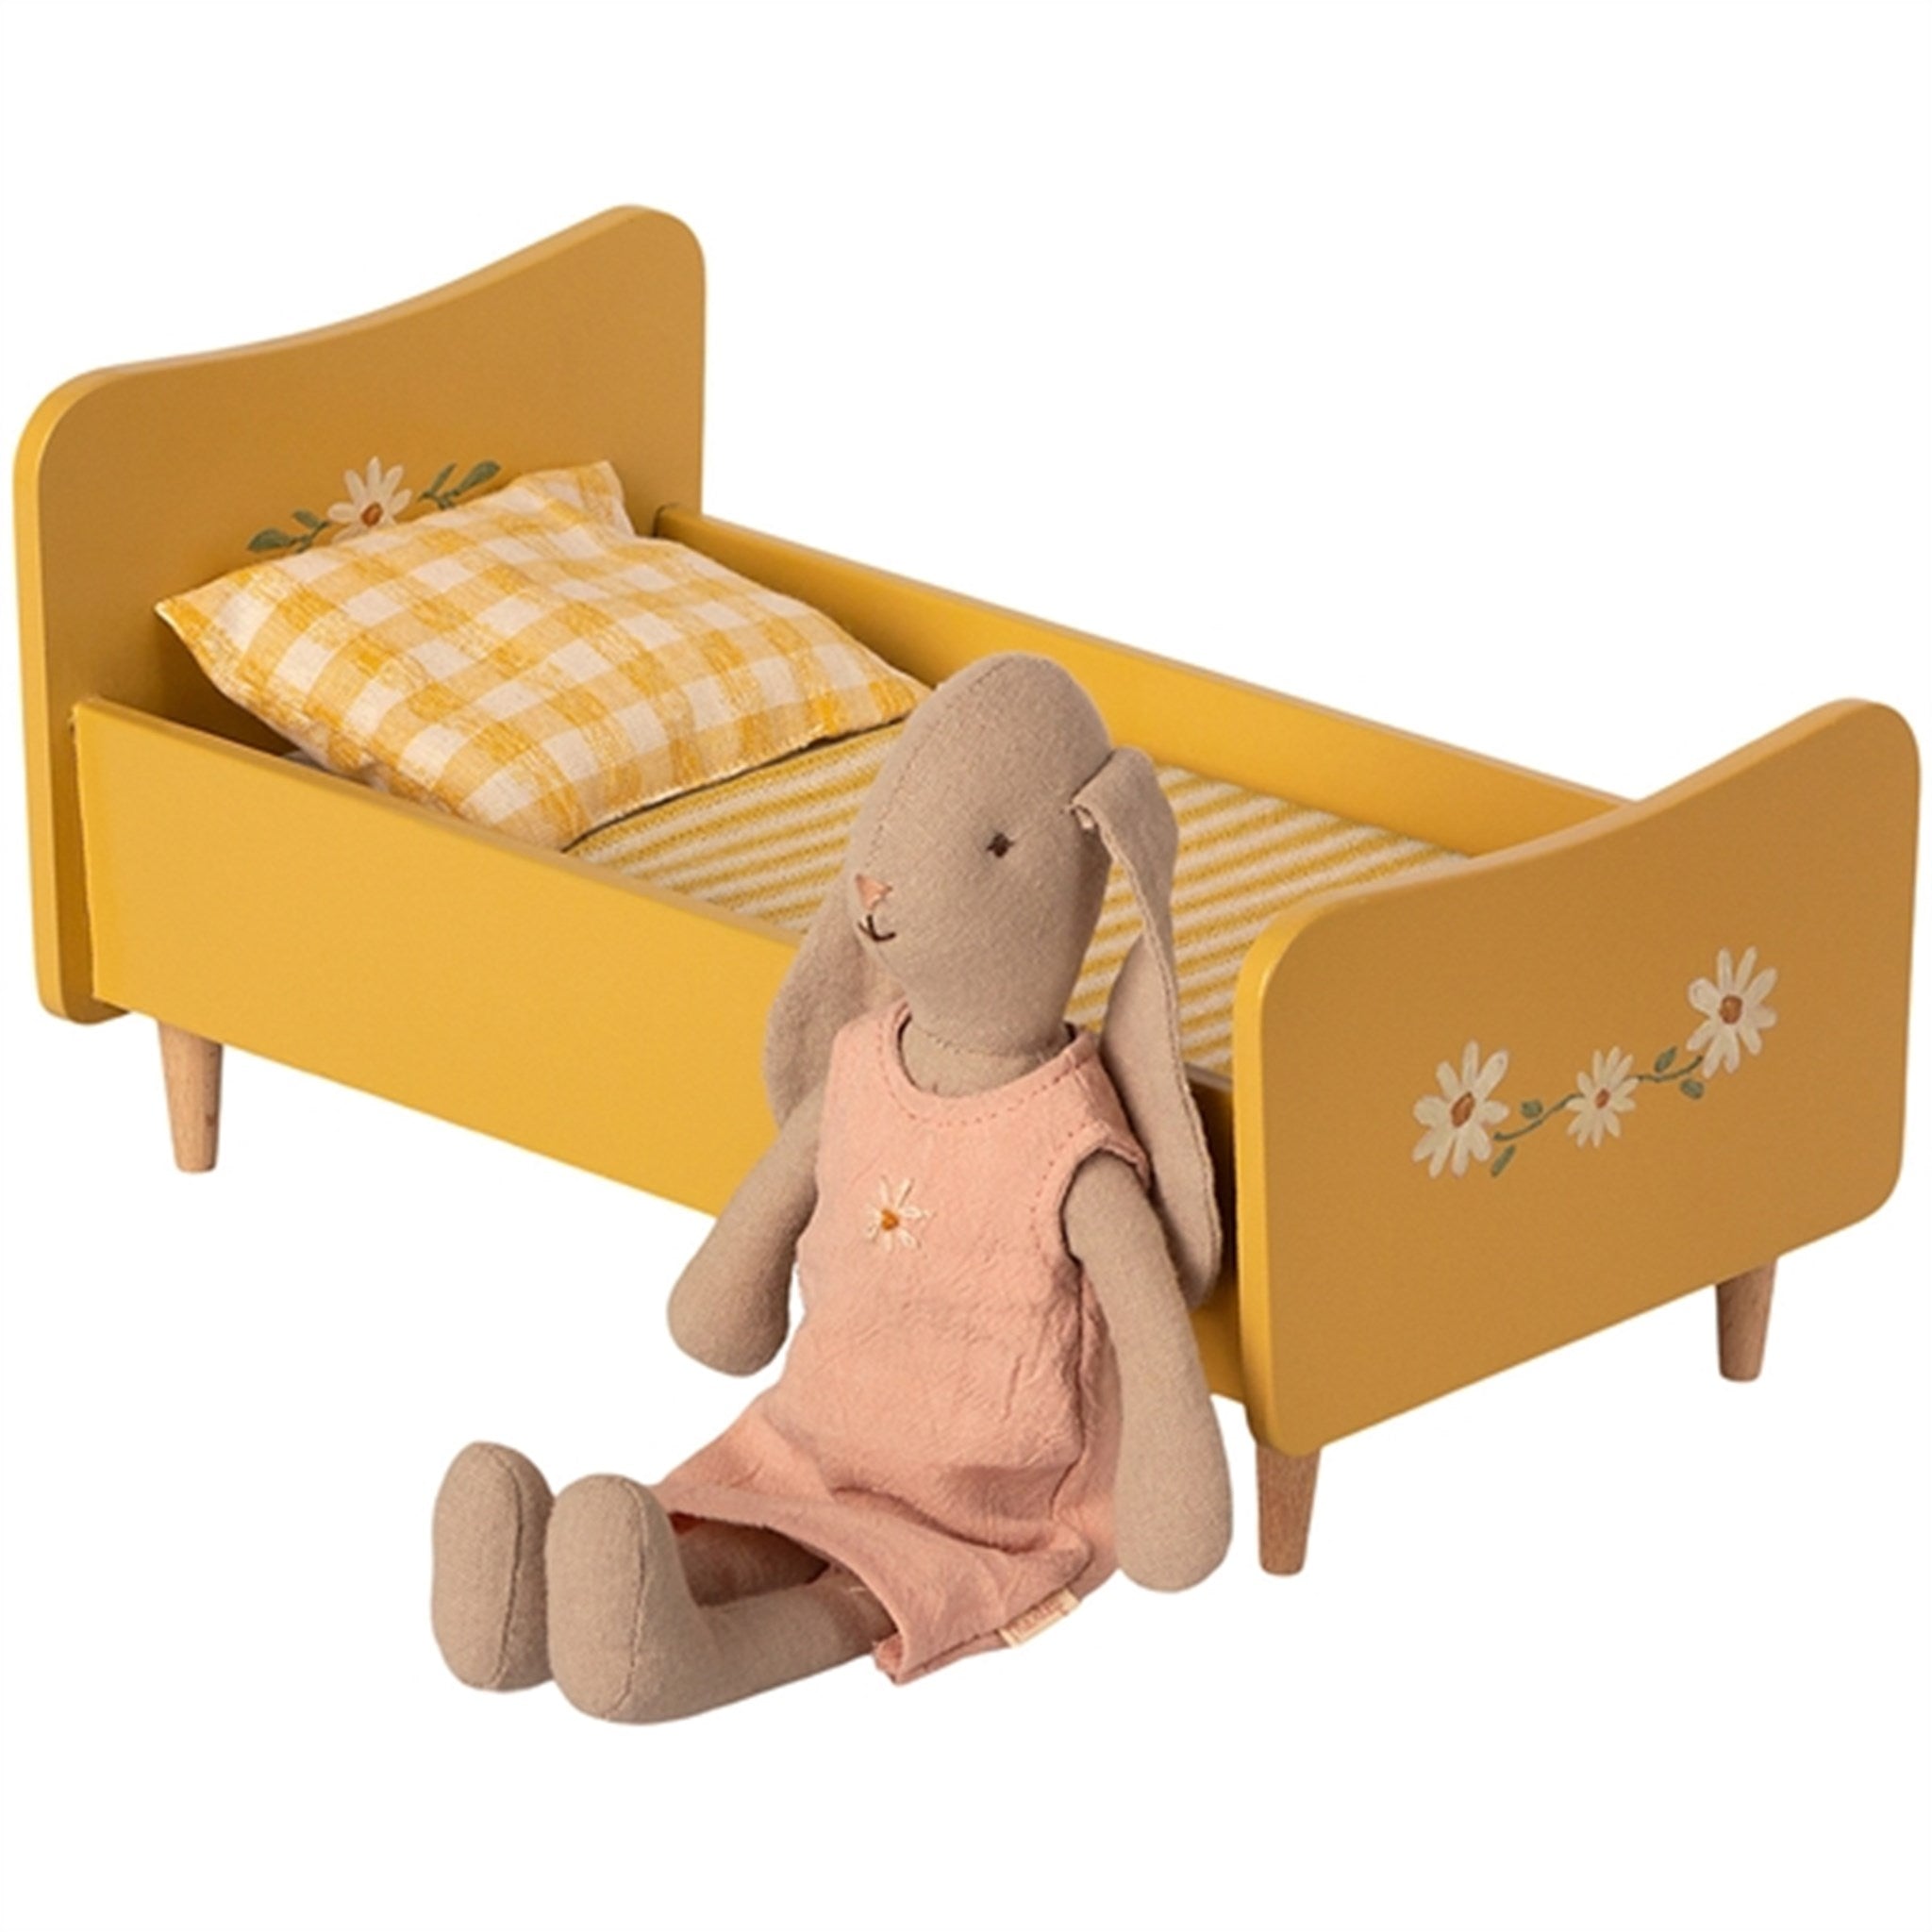 Maileg Wooden Bed Mini Yellow 2